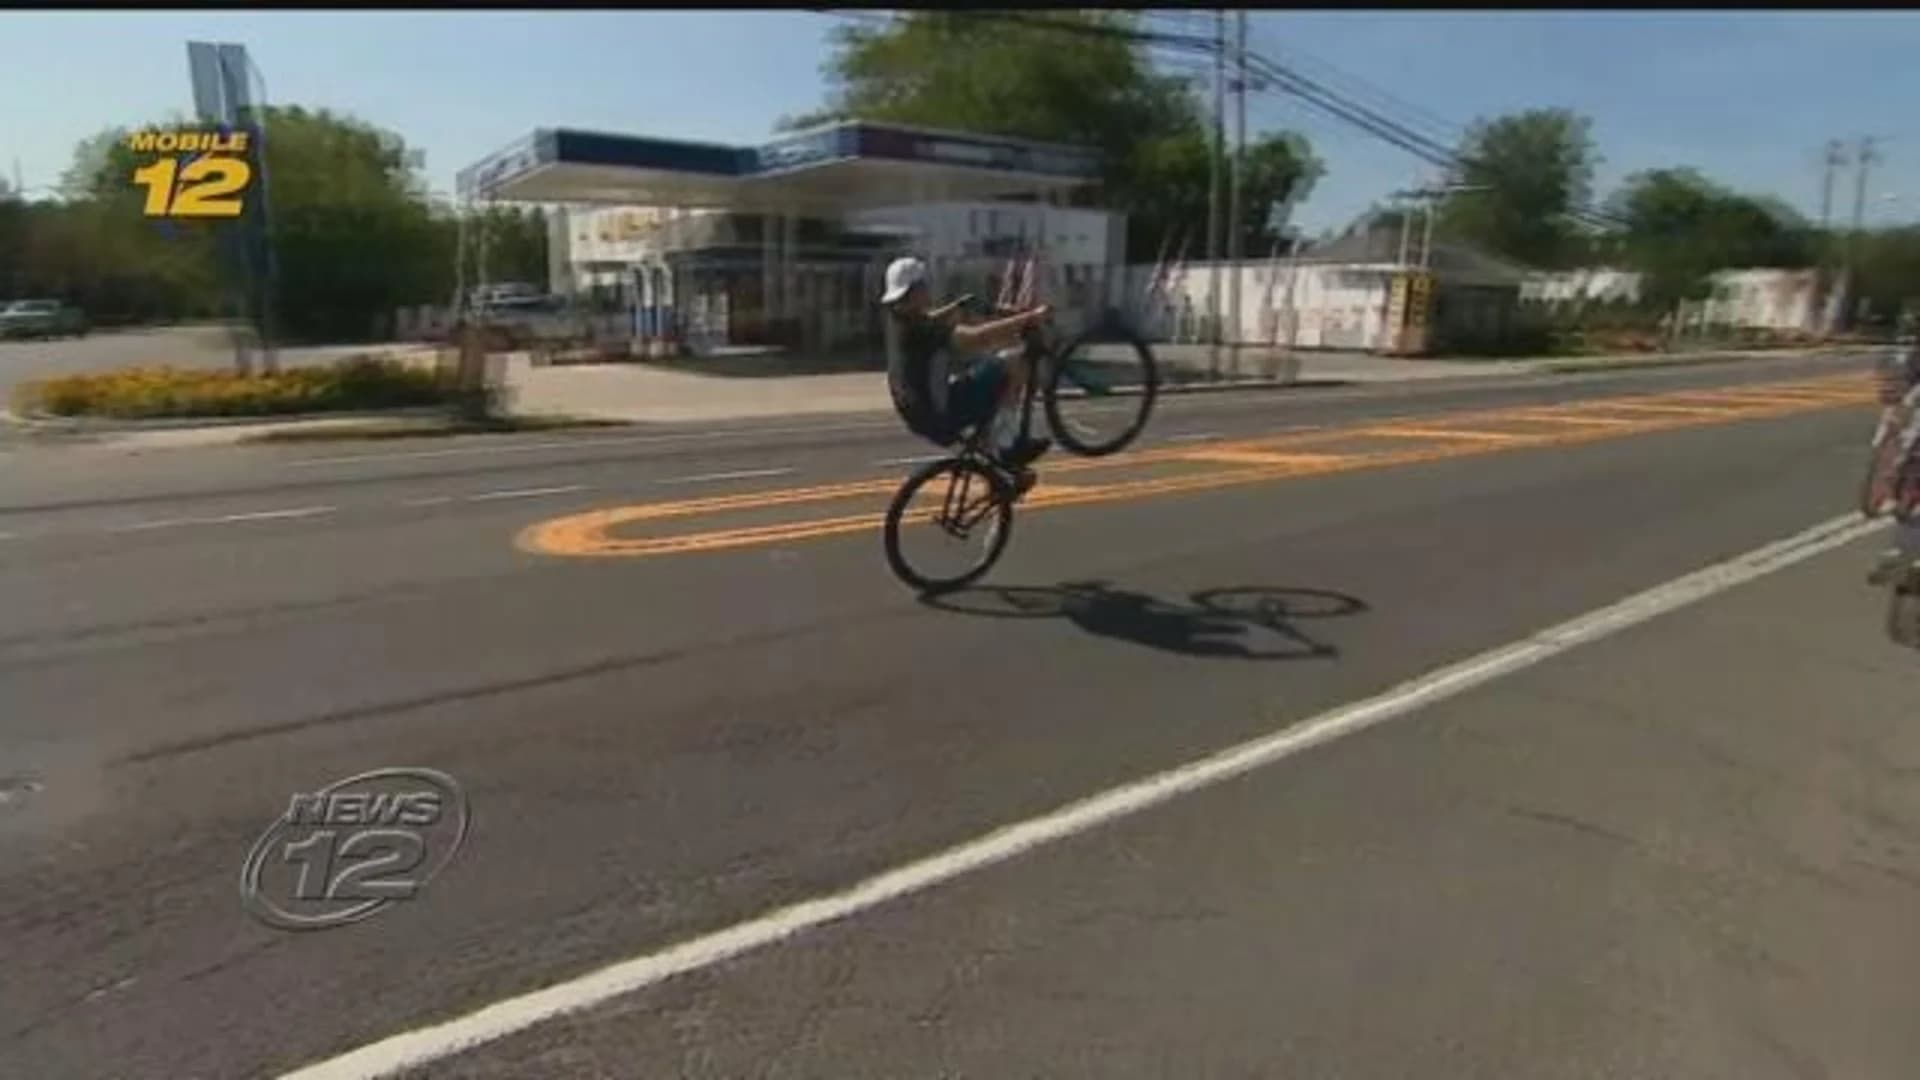 Teens performing bike stunts in traffic spark safety concerns